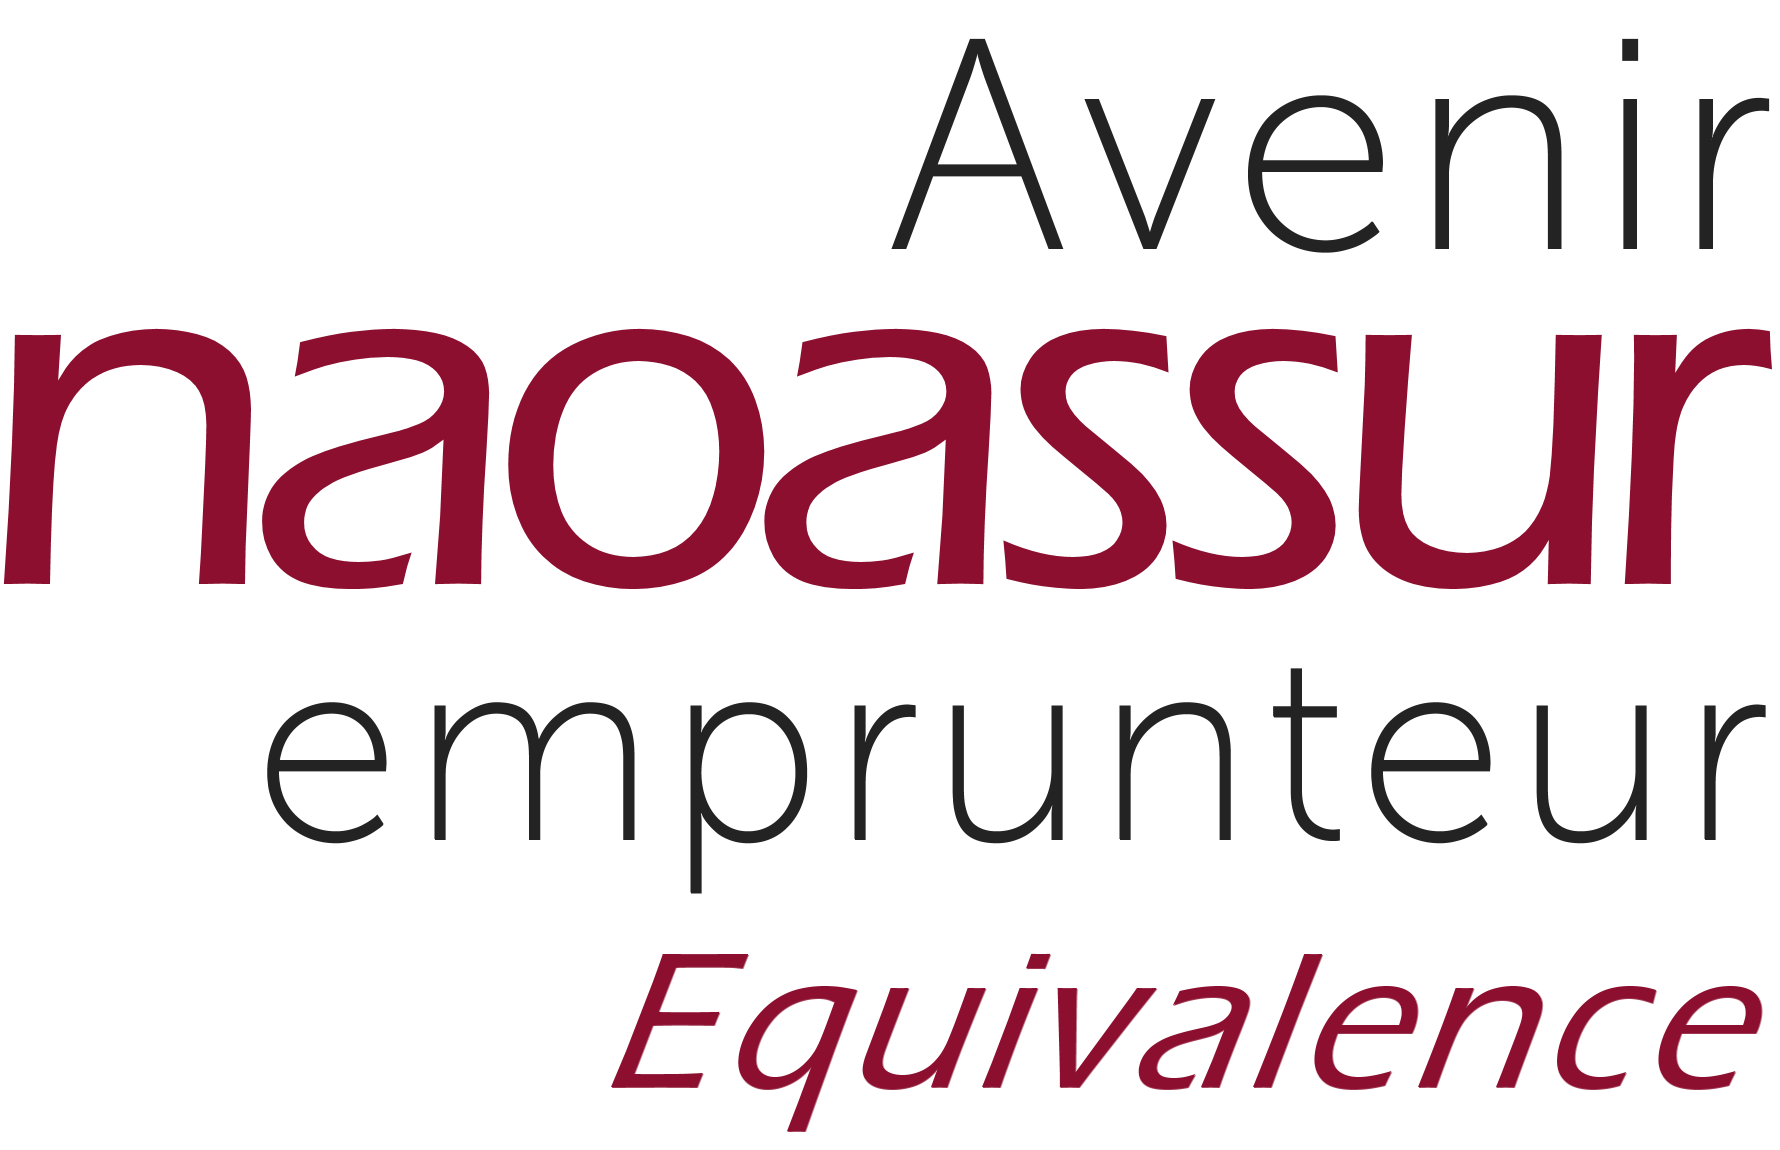 Diapositive Avenir Naoassur Emprunteur Equivalence